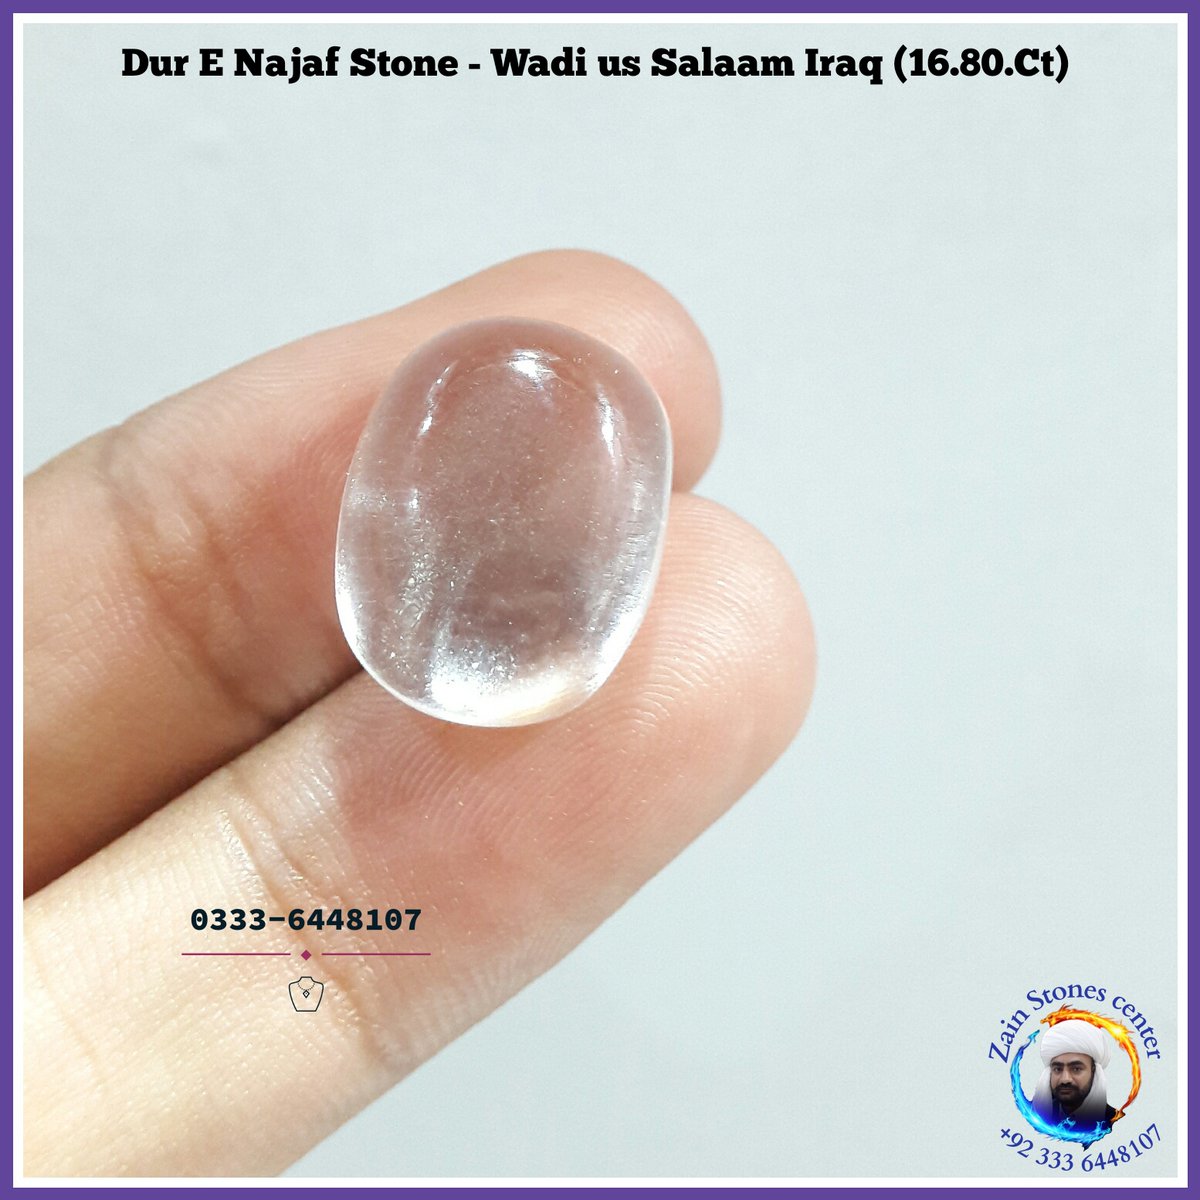 *'Dur E Najaf Stone'*

….........💎✨

🏪 Zain Stones Center💎

✨Gemstone Shop in Pakistan.

WhatsApp : +92 333 6448107

#gemstones

….💎

#DurENajaf
#Gemstone
#HealingStones
#DurENajafStone
#DurENajafJewelry
#zainstonescenter